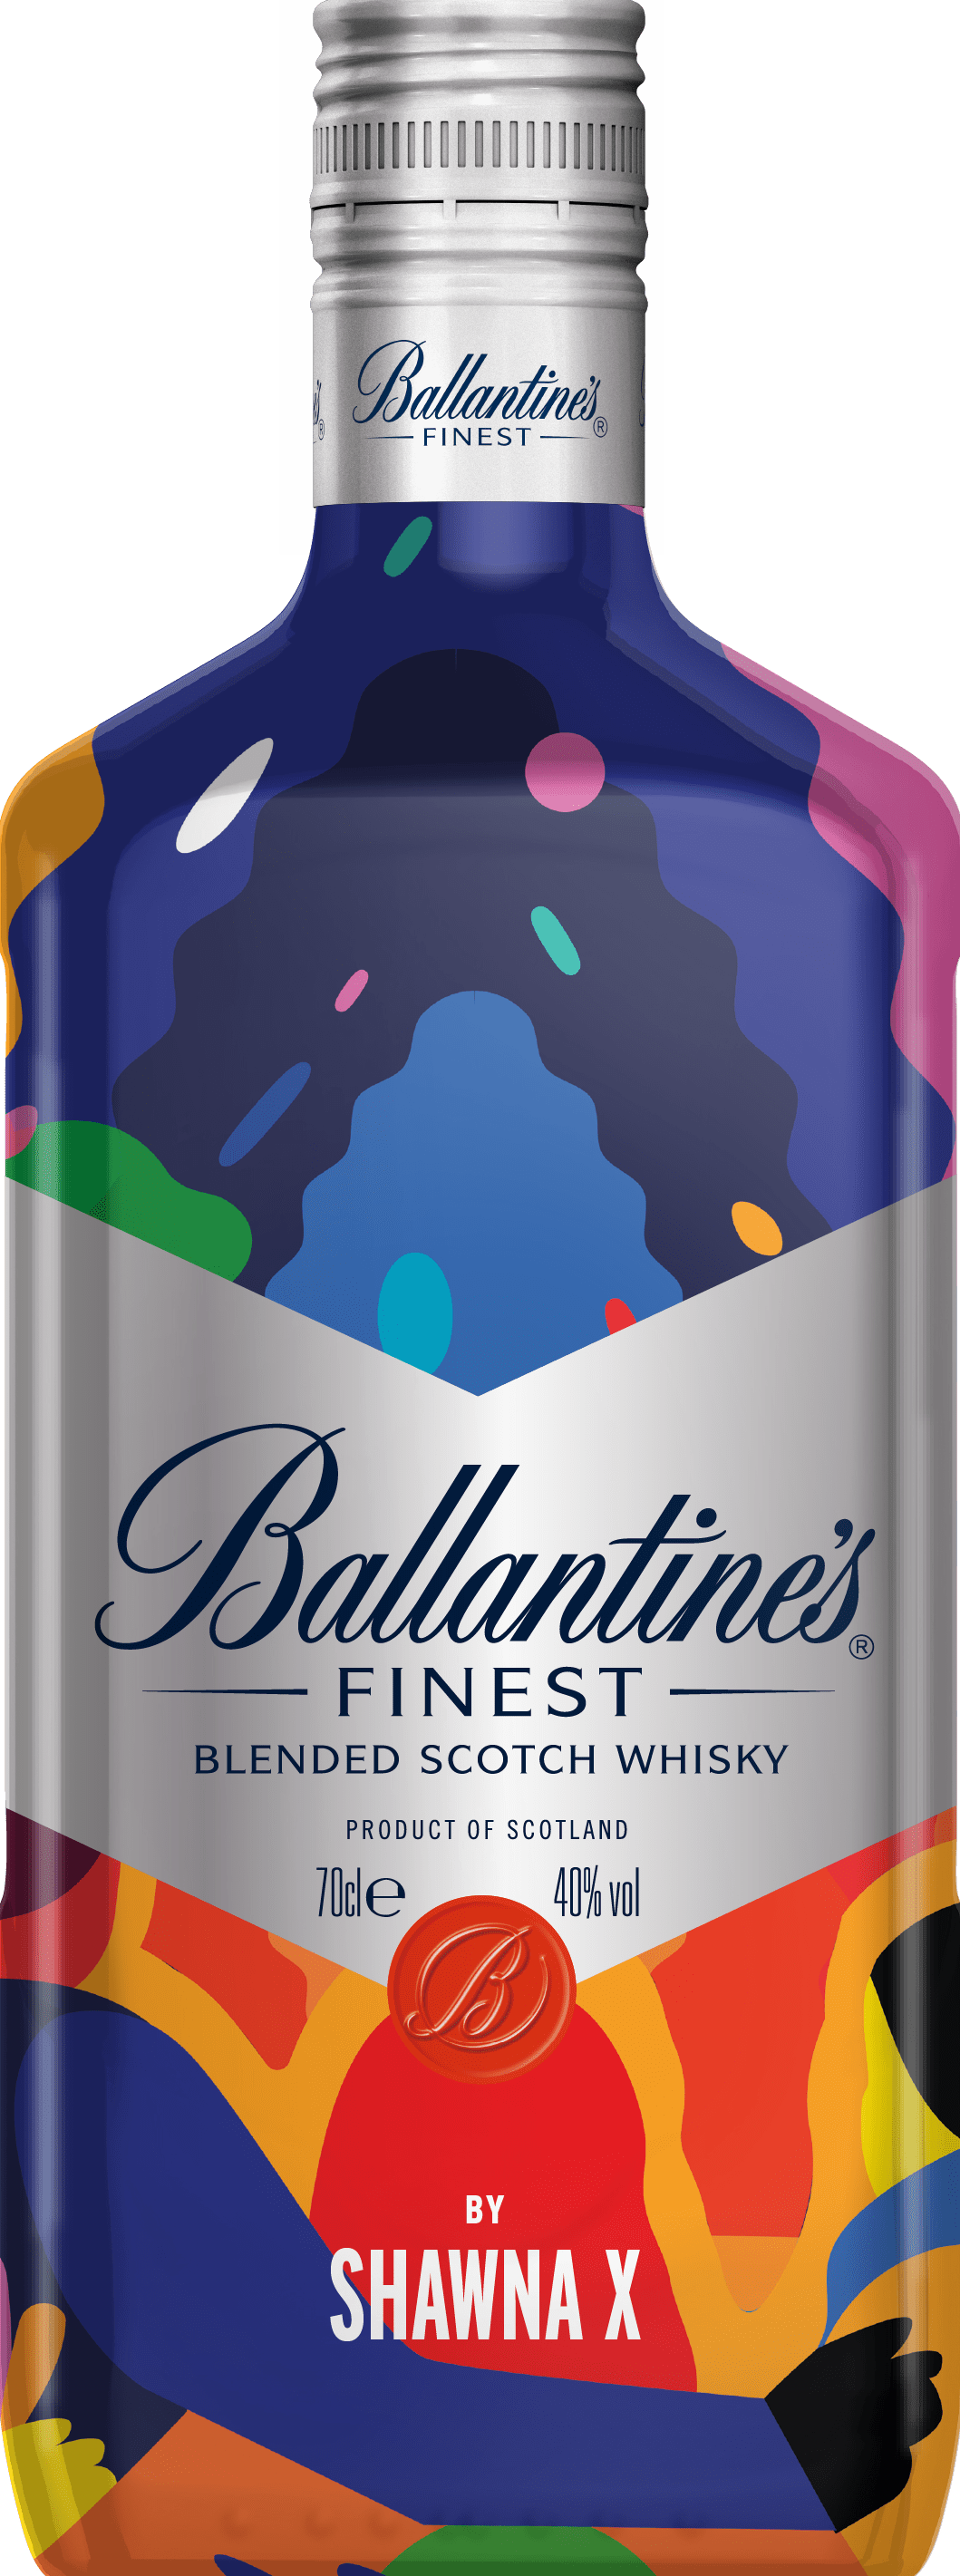 BUY] Ballantine's Finest Shawna X Edition Blended Scotch